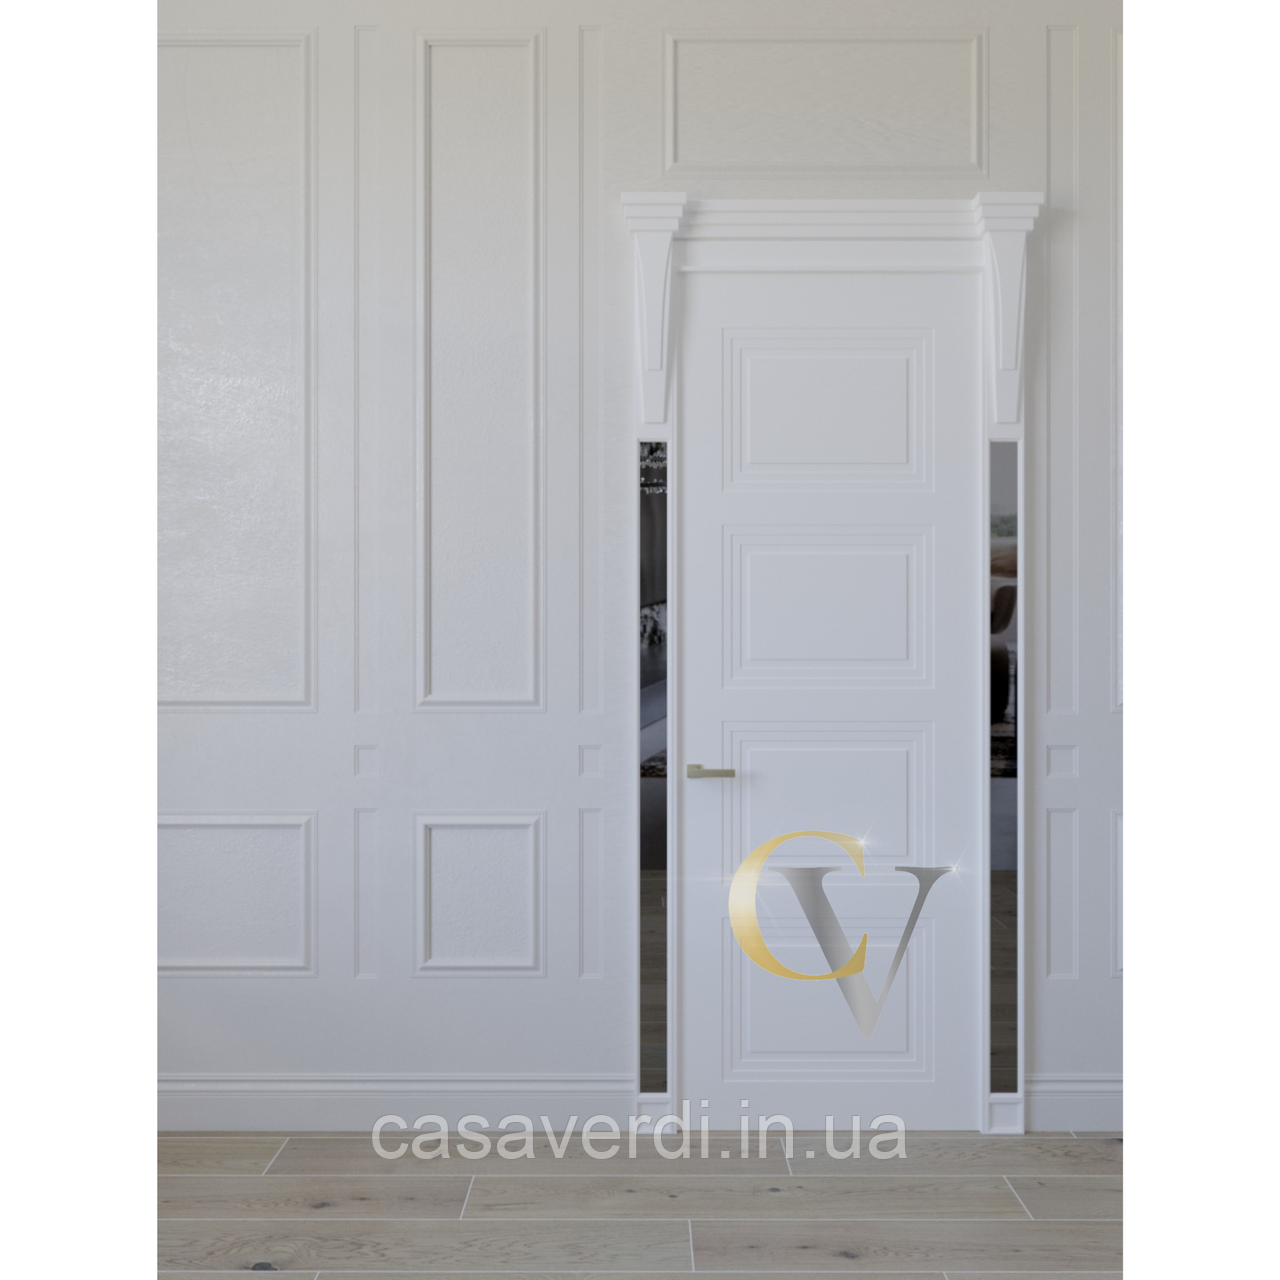 Міжкімнатні двері Casa Verdi Portalle Premium з масиву вільхи